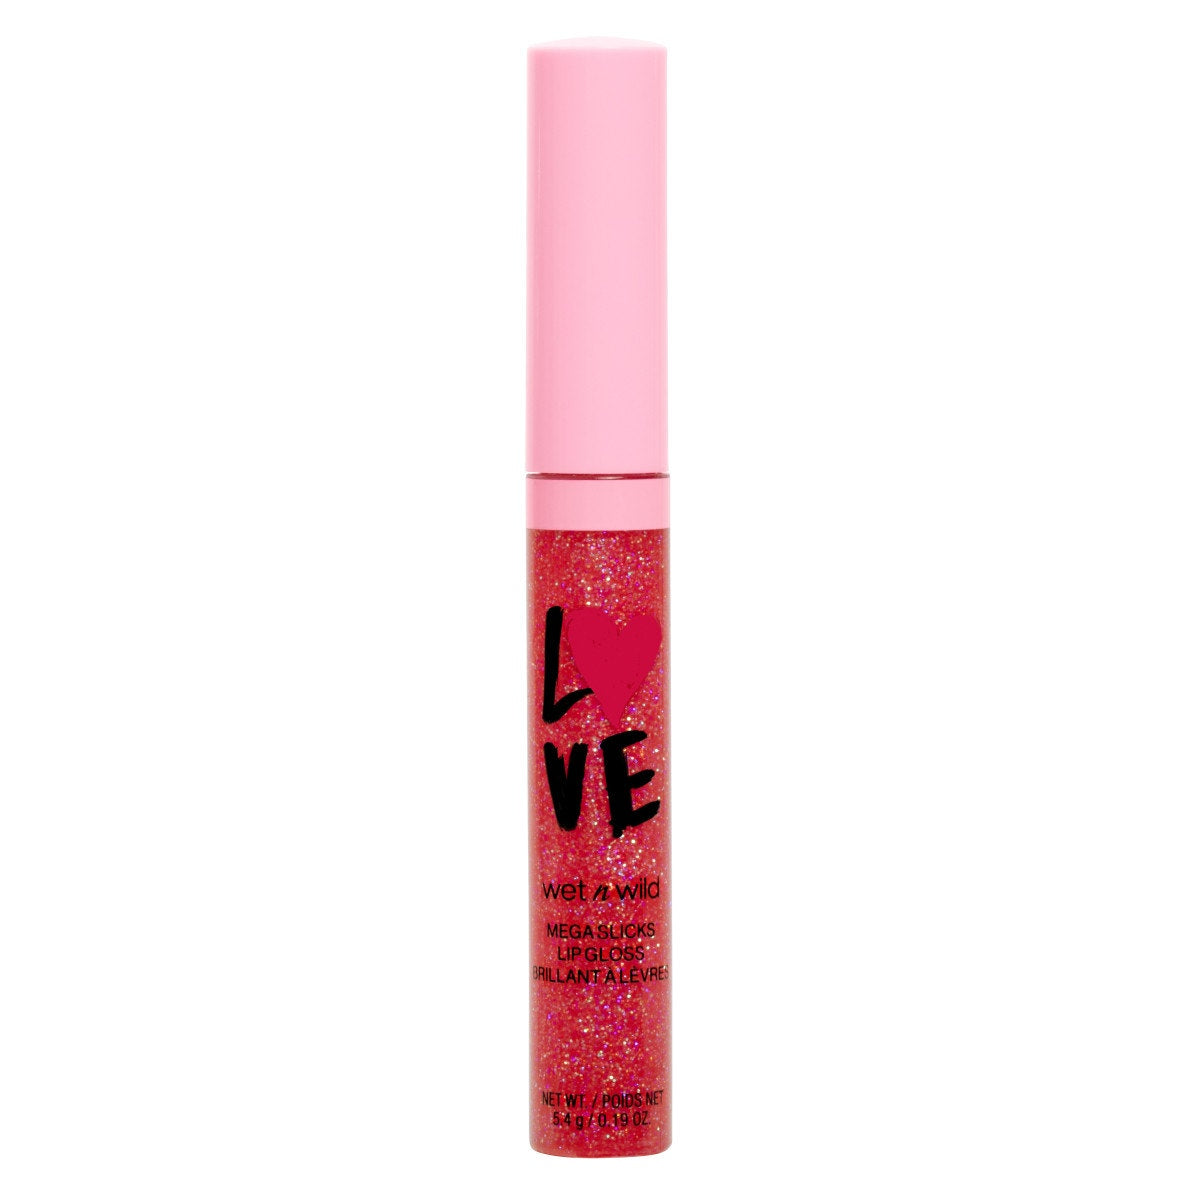 Wet n Wild - Valentine's Mega Slicks Lip Gloss Crushed Grapes